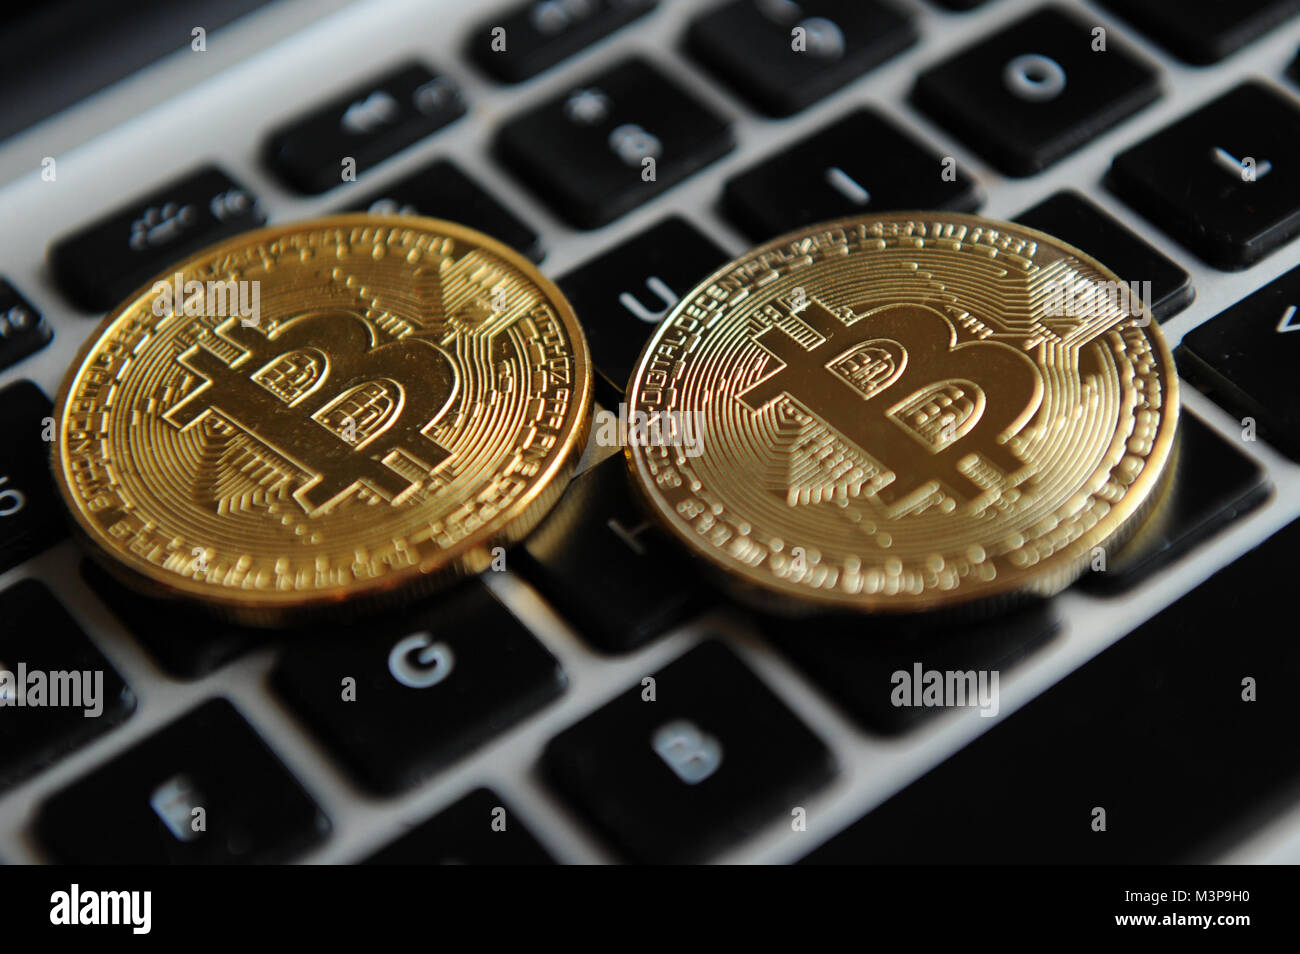 Bitcoins on a computer keyboard Stock Photo